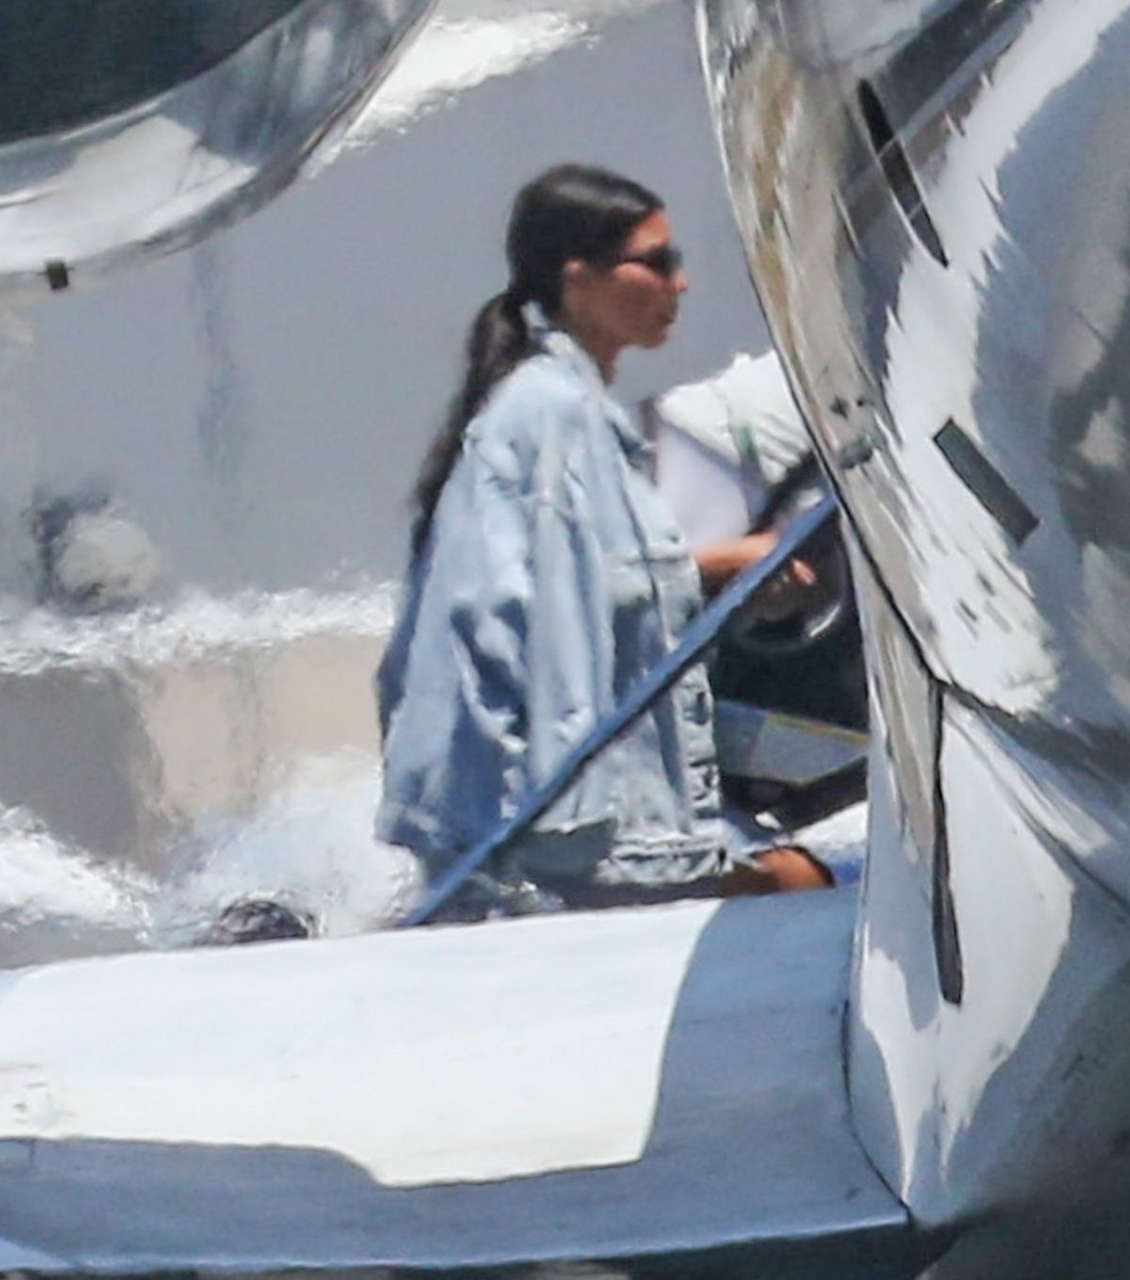 Kim Kardashian Boarding Private Plane Airport Van Nuys